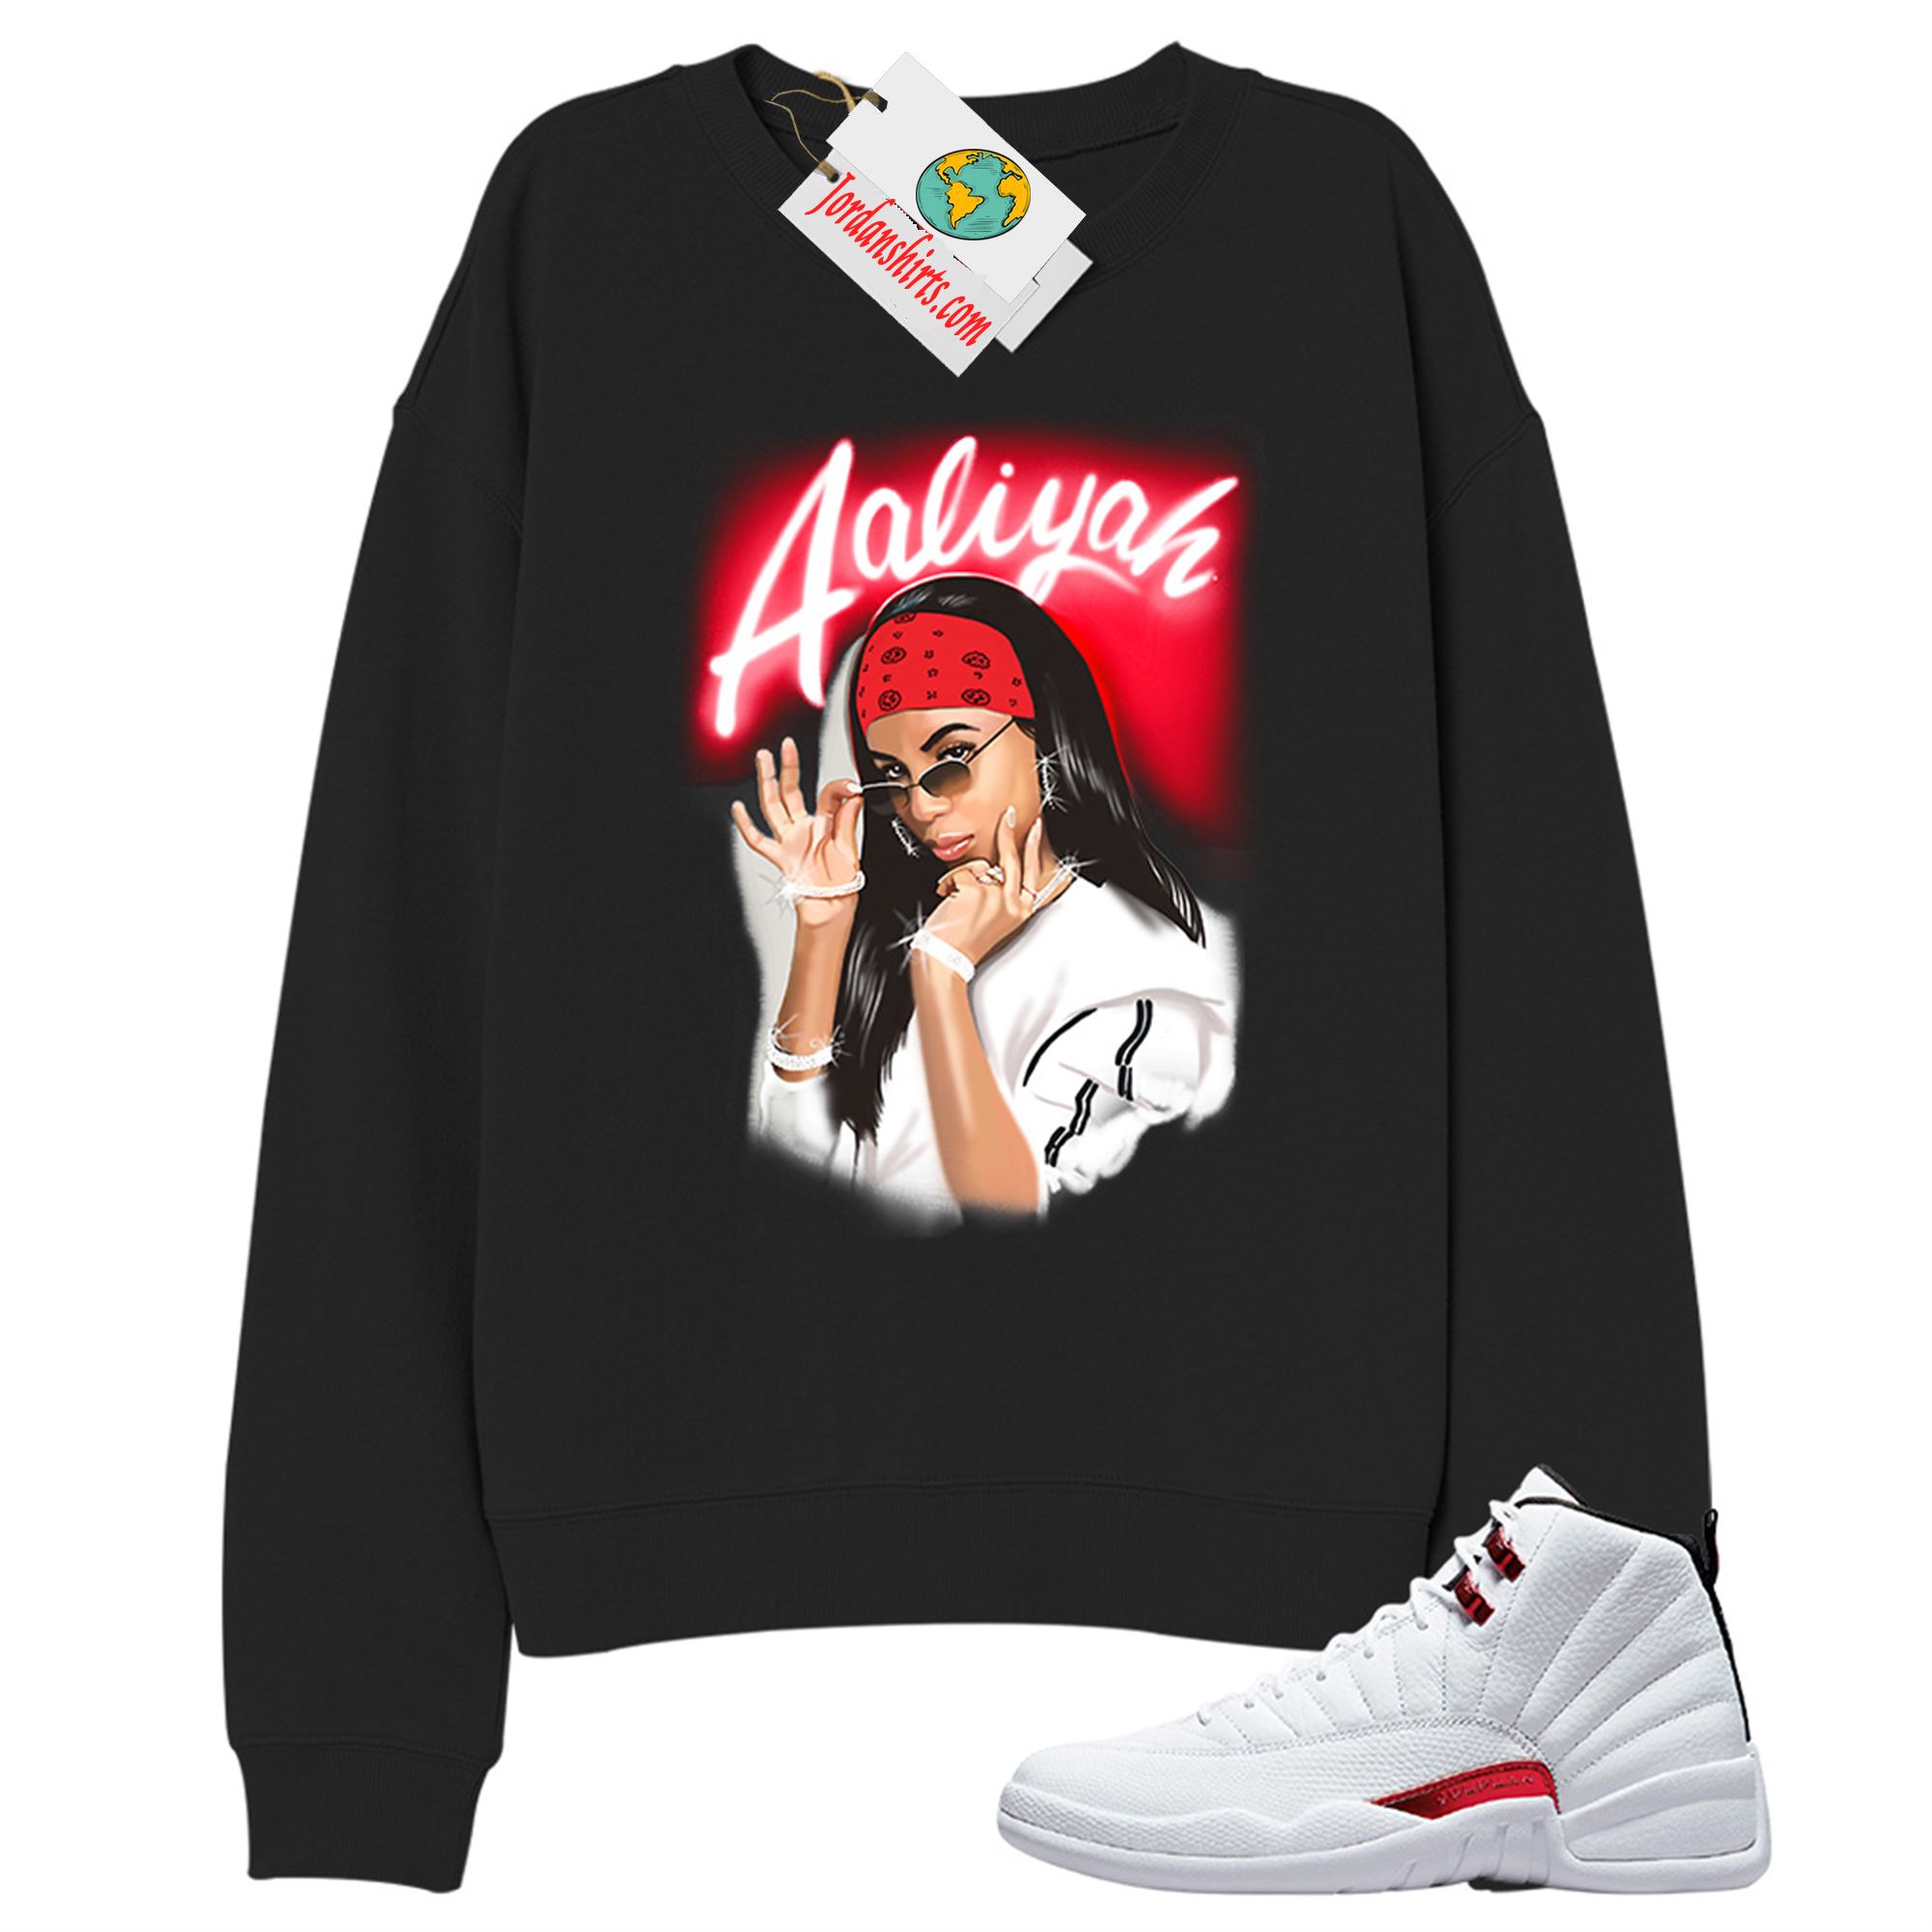 Jordan 12 Sweatshirt, Aaliyah Airbrush Black Sweatshirt Air Jordan 12 Twist 12s Full Size Up To 5xl